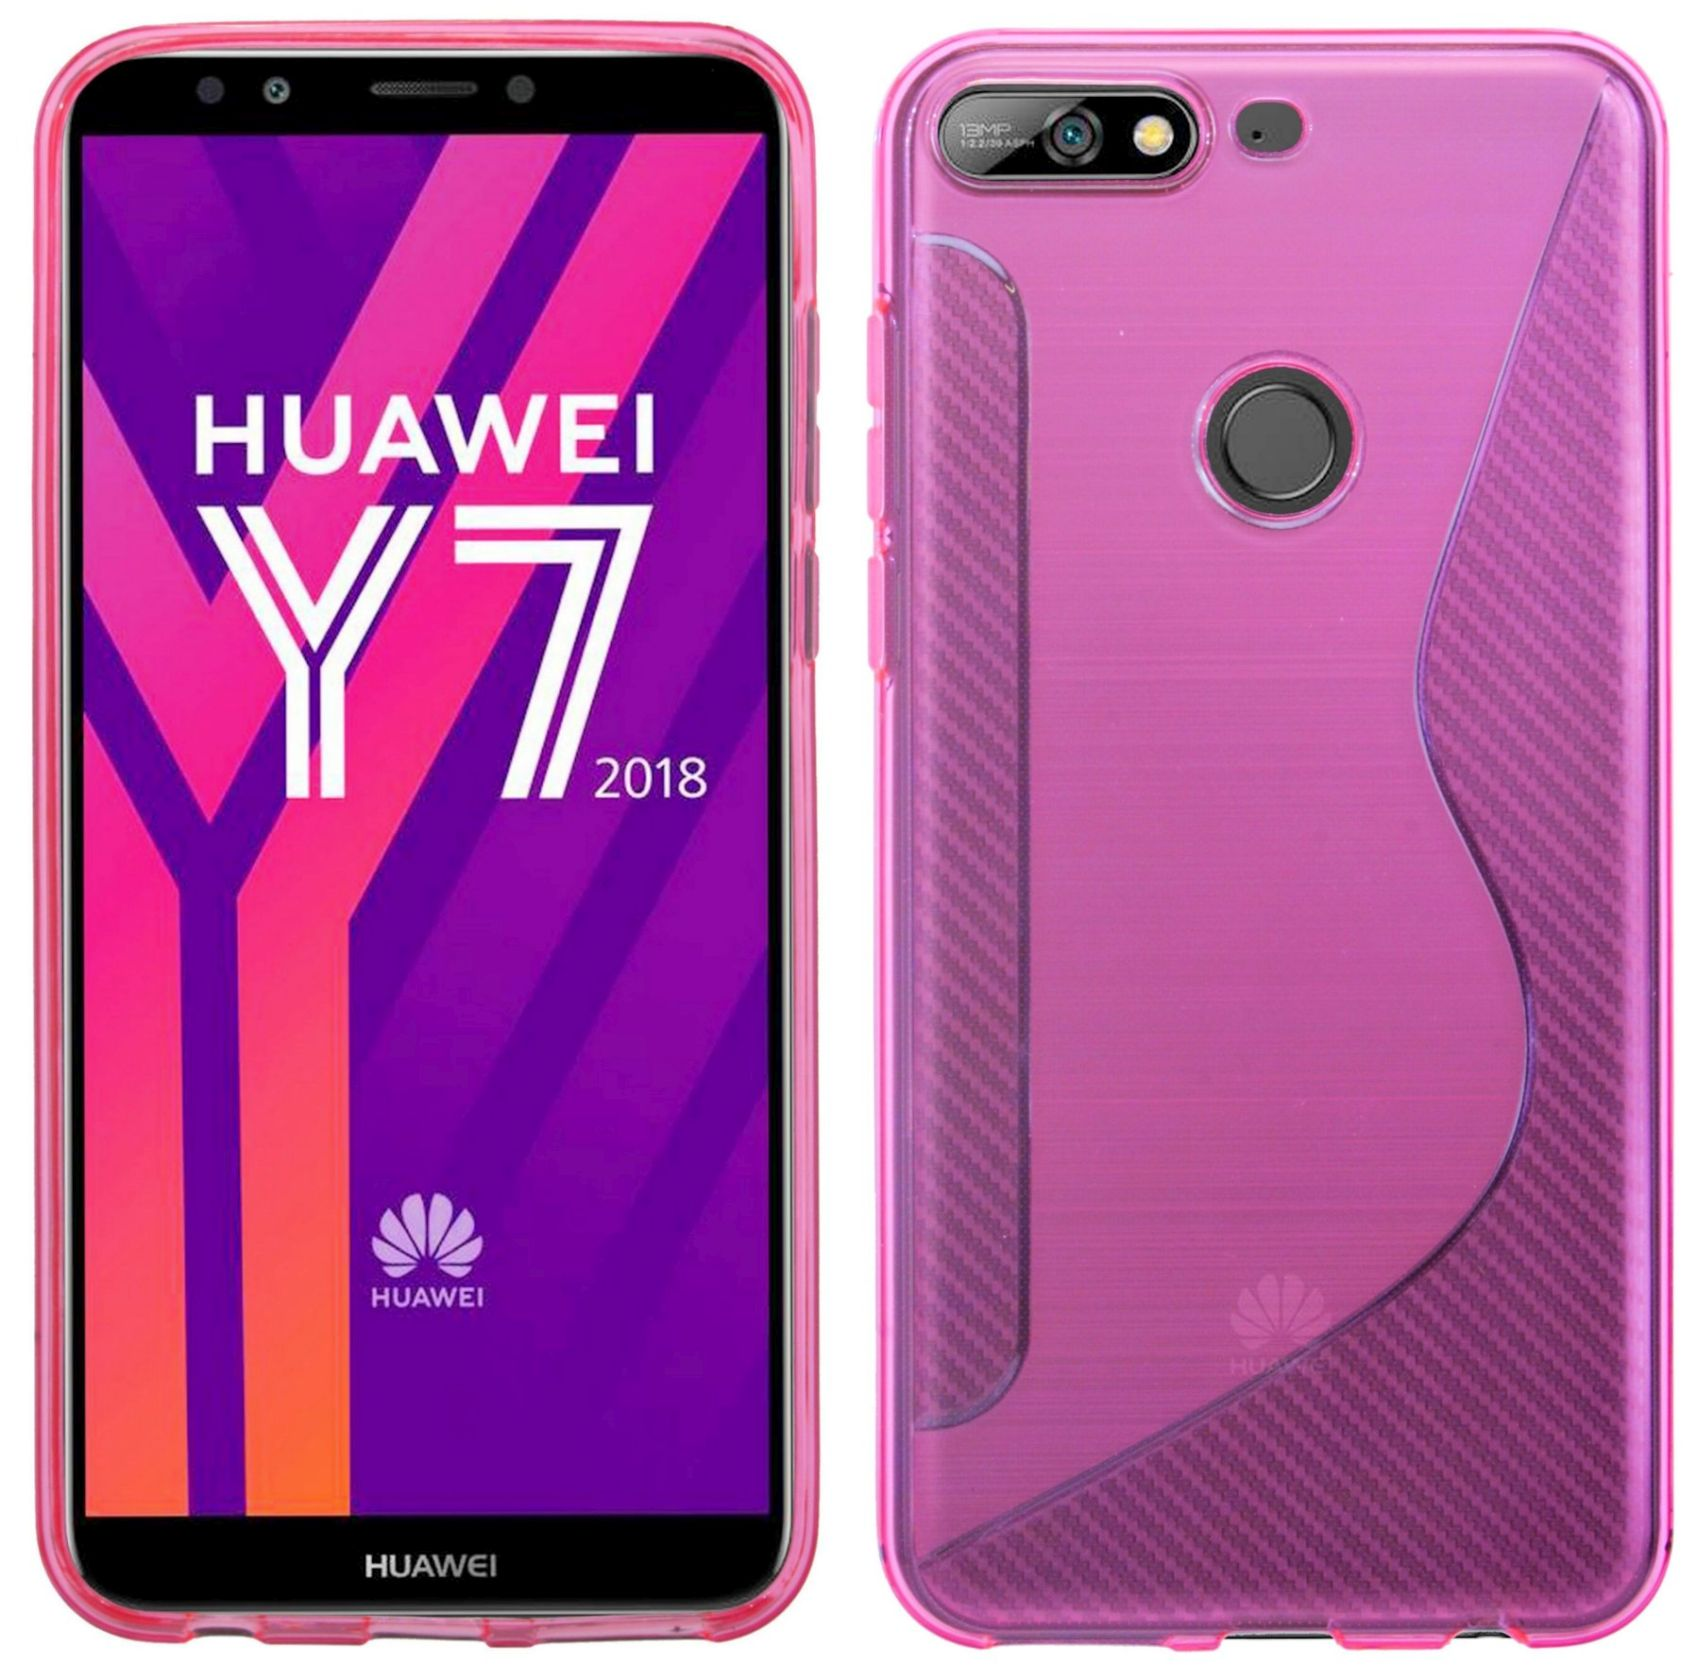 COFI HUAWEI Bumper, Hülle in 2018, Y7 Case Rosa Silikon Huawei, Y7 Silikonschale Bumper 2018//S-Line Pink, SchutzHülle Cover Zubehör TPU